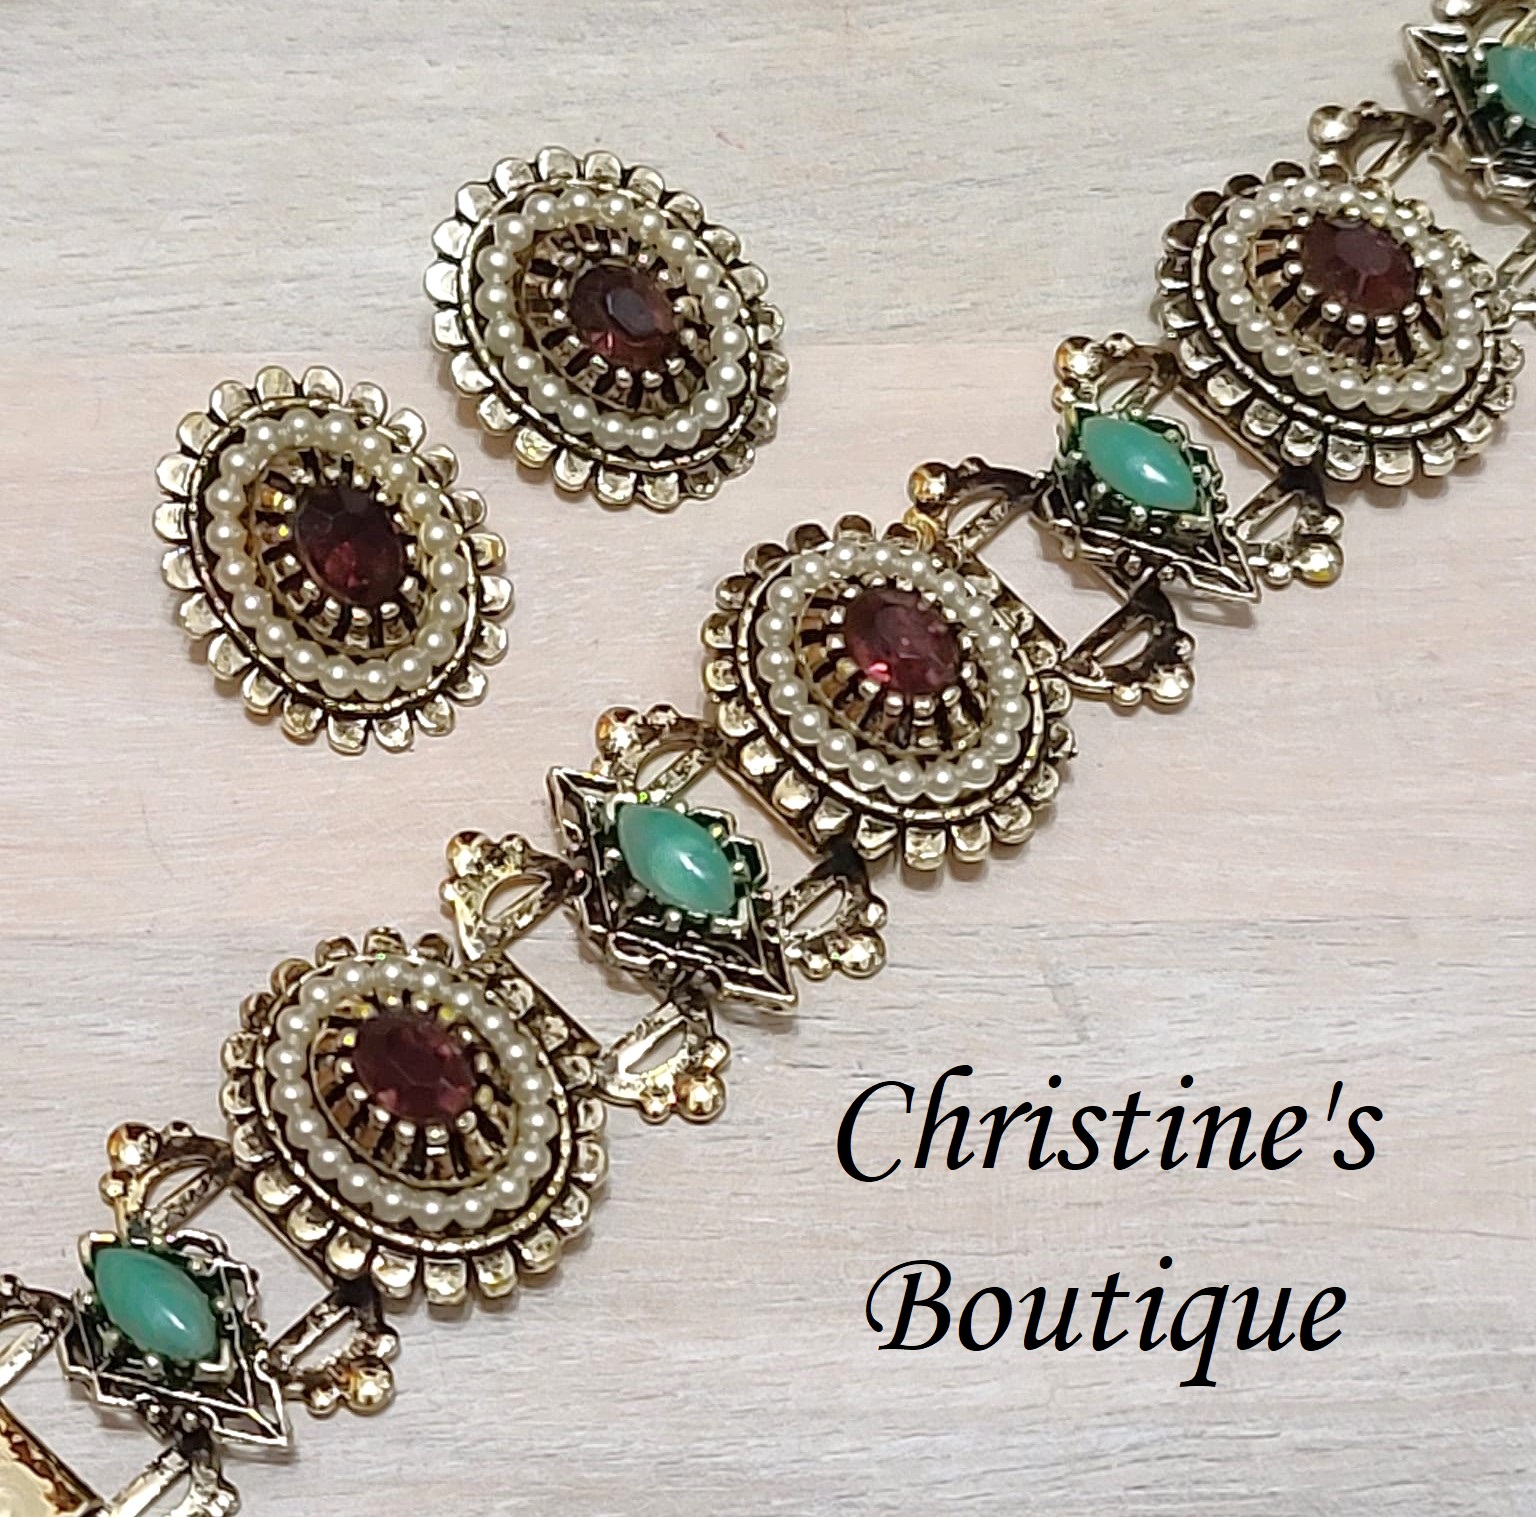 Vintage bracelet and earrings set, pearls, purple rhinestones and turquoise cabachons